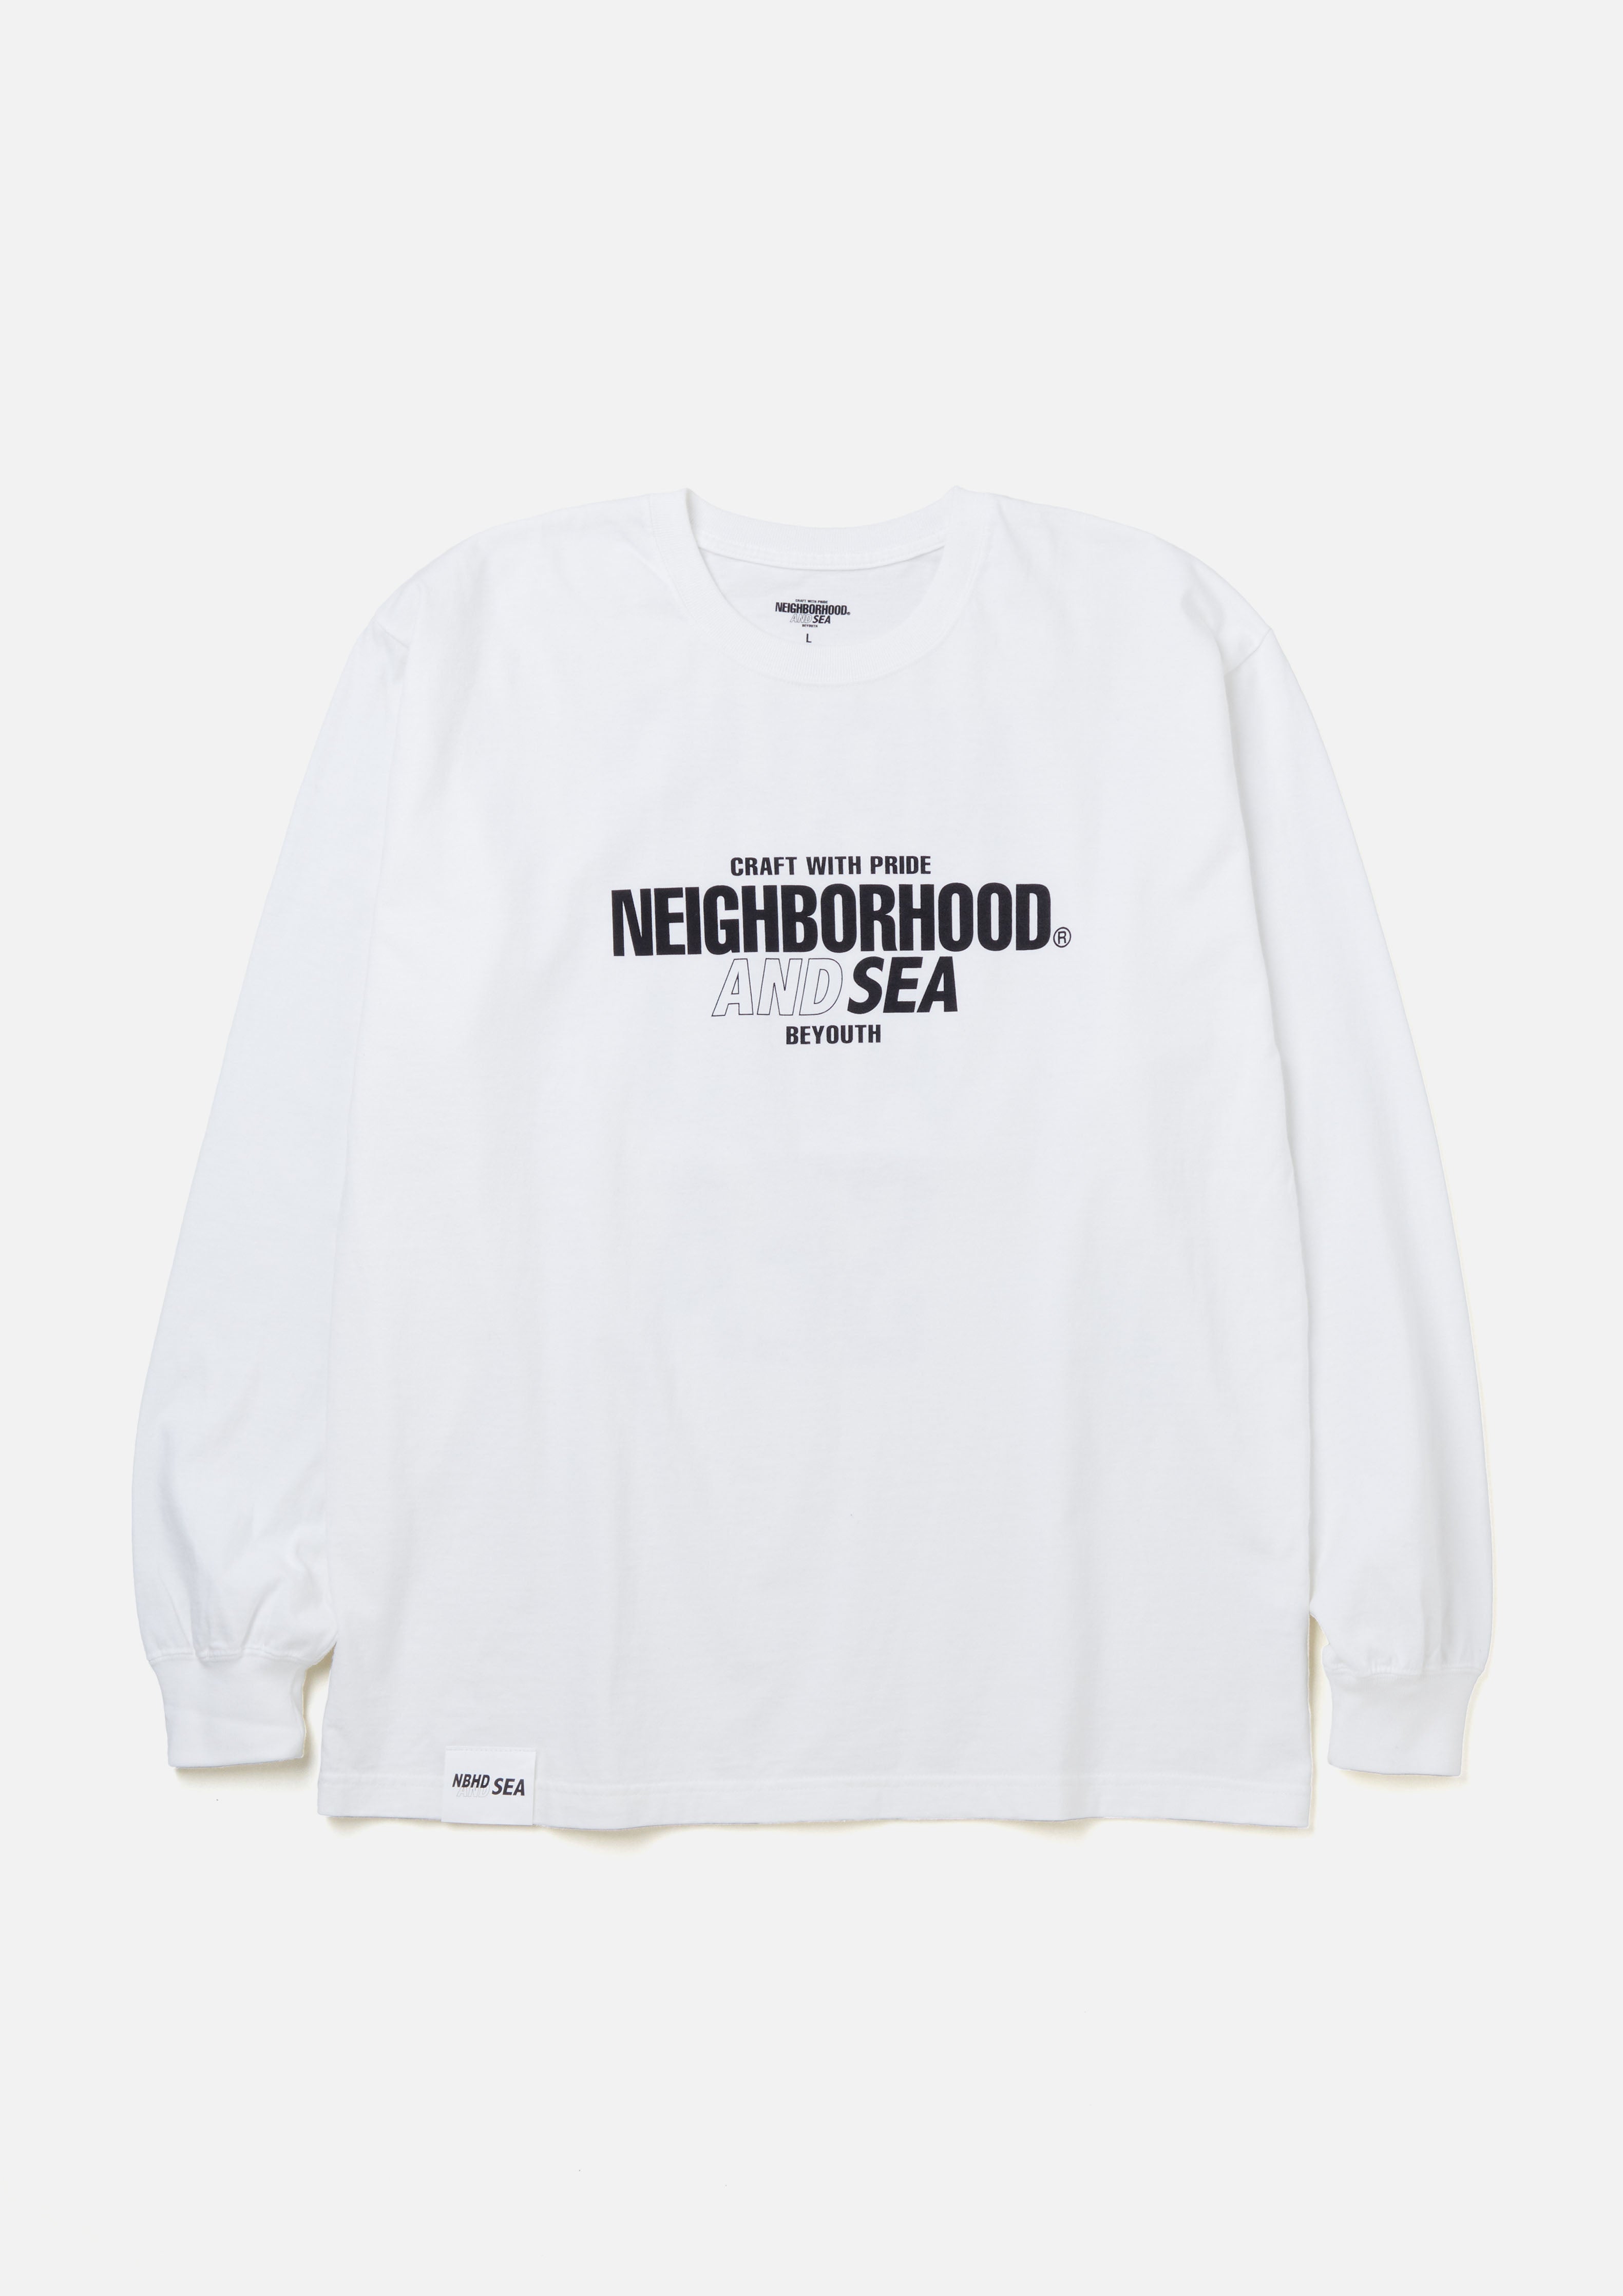 NEIGHBORHOOD NH TEE-1 SS . CO Tシャツ Lサイズ 値引きする 3210円